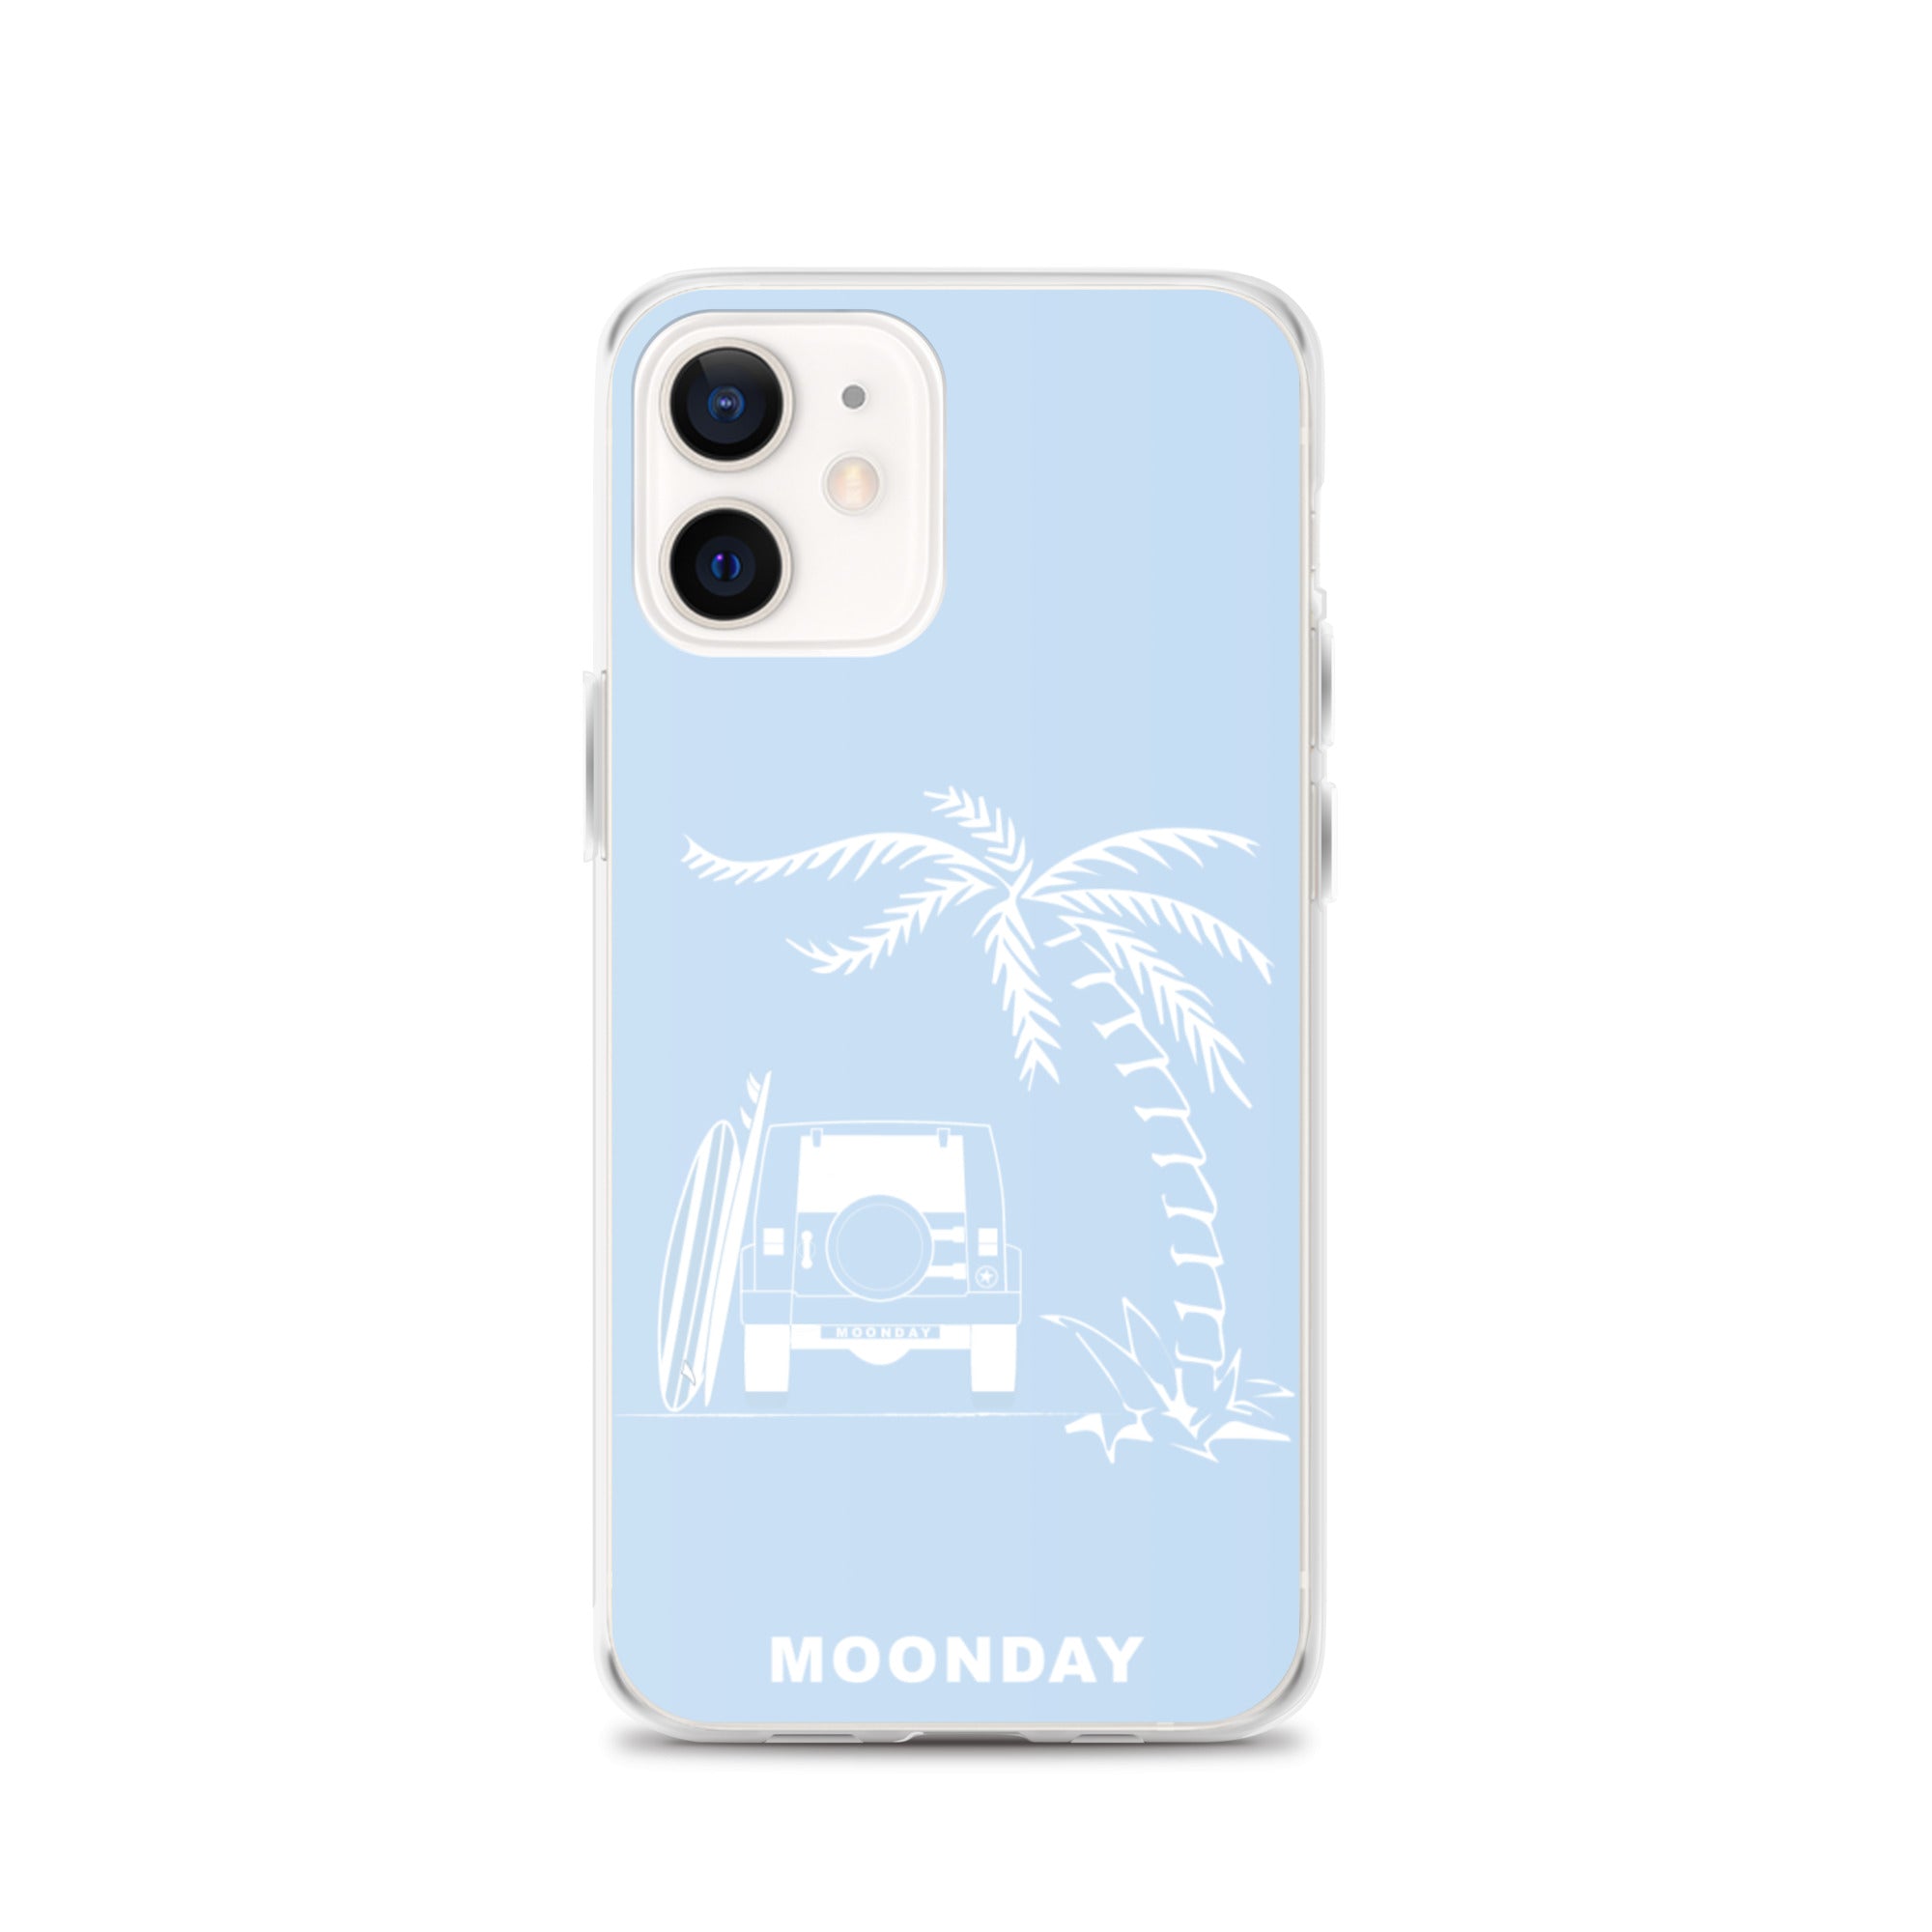 Surf iPhone Case